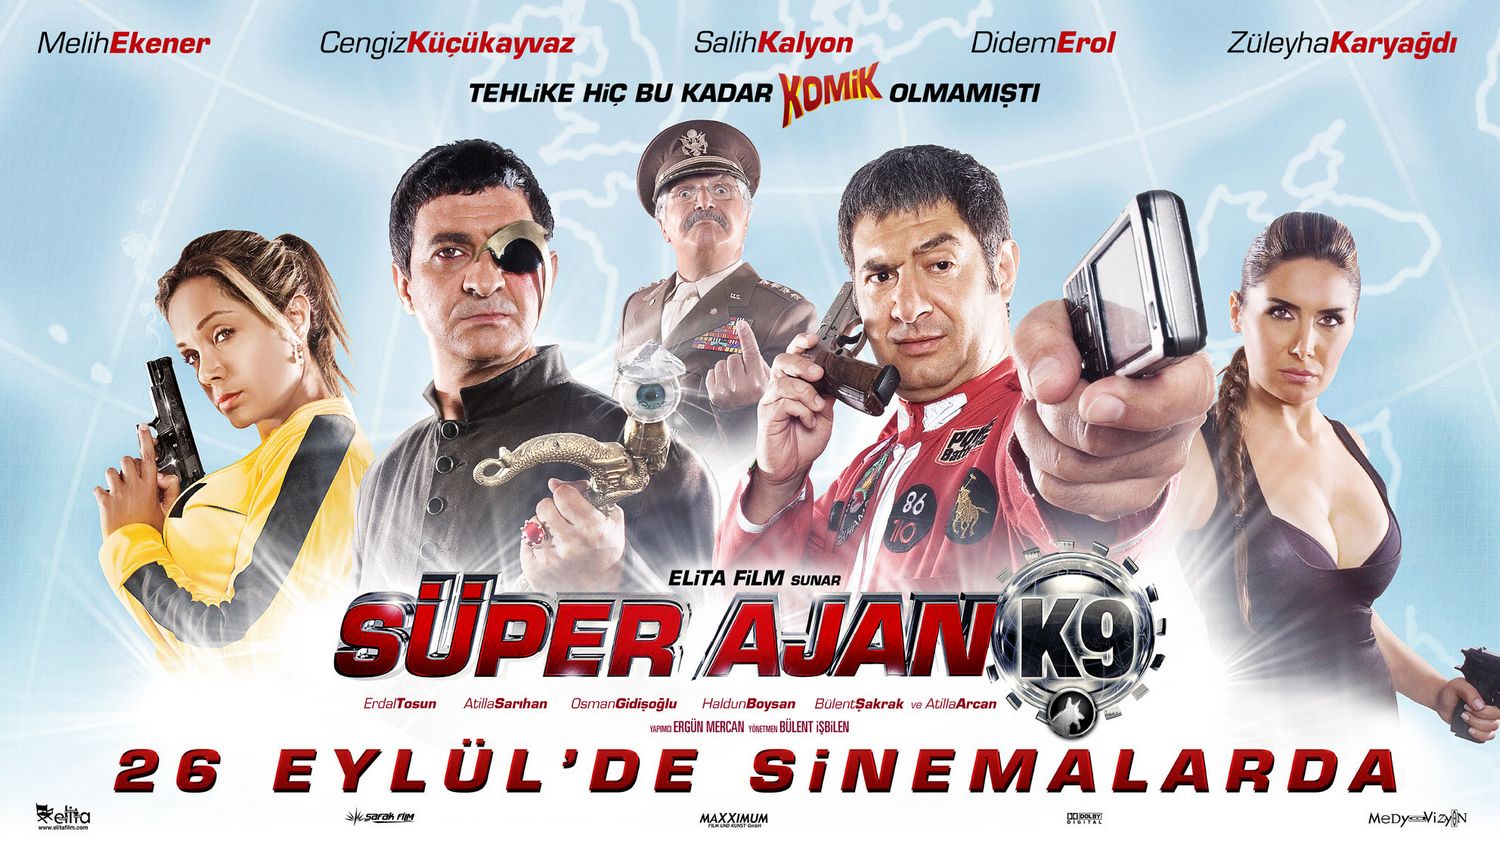 Extra Large Movie Poster Image for Süper Ajan K9 (#2 of 7)